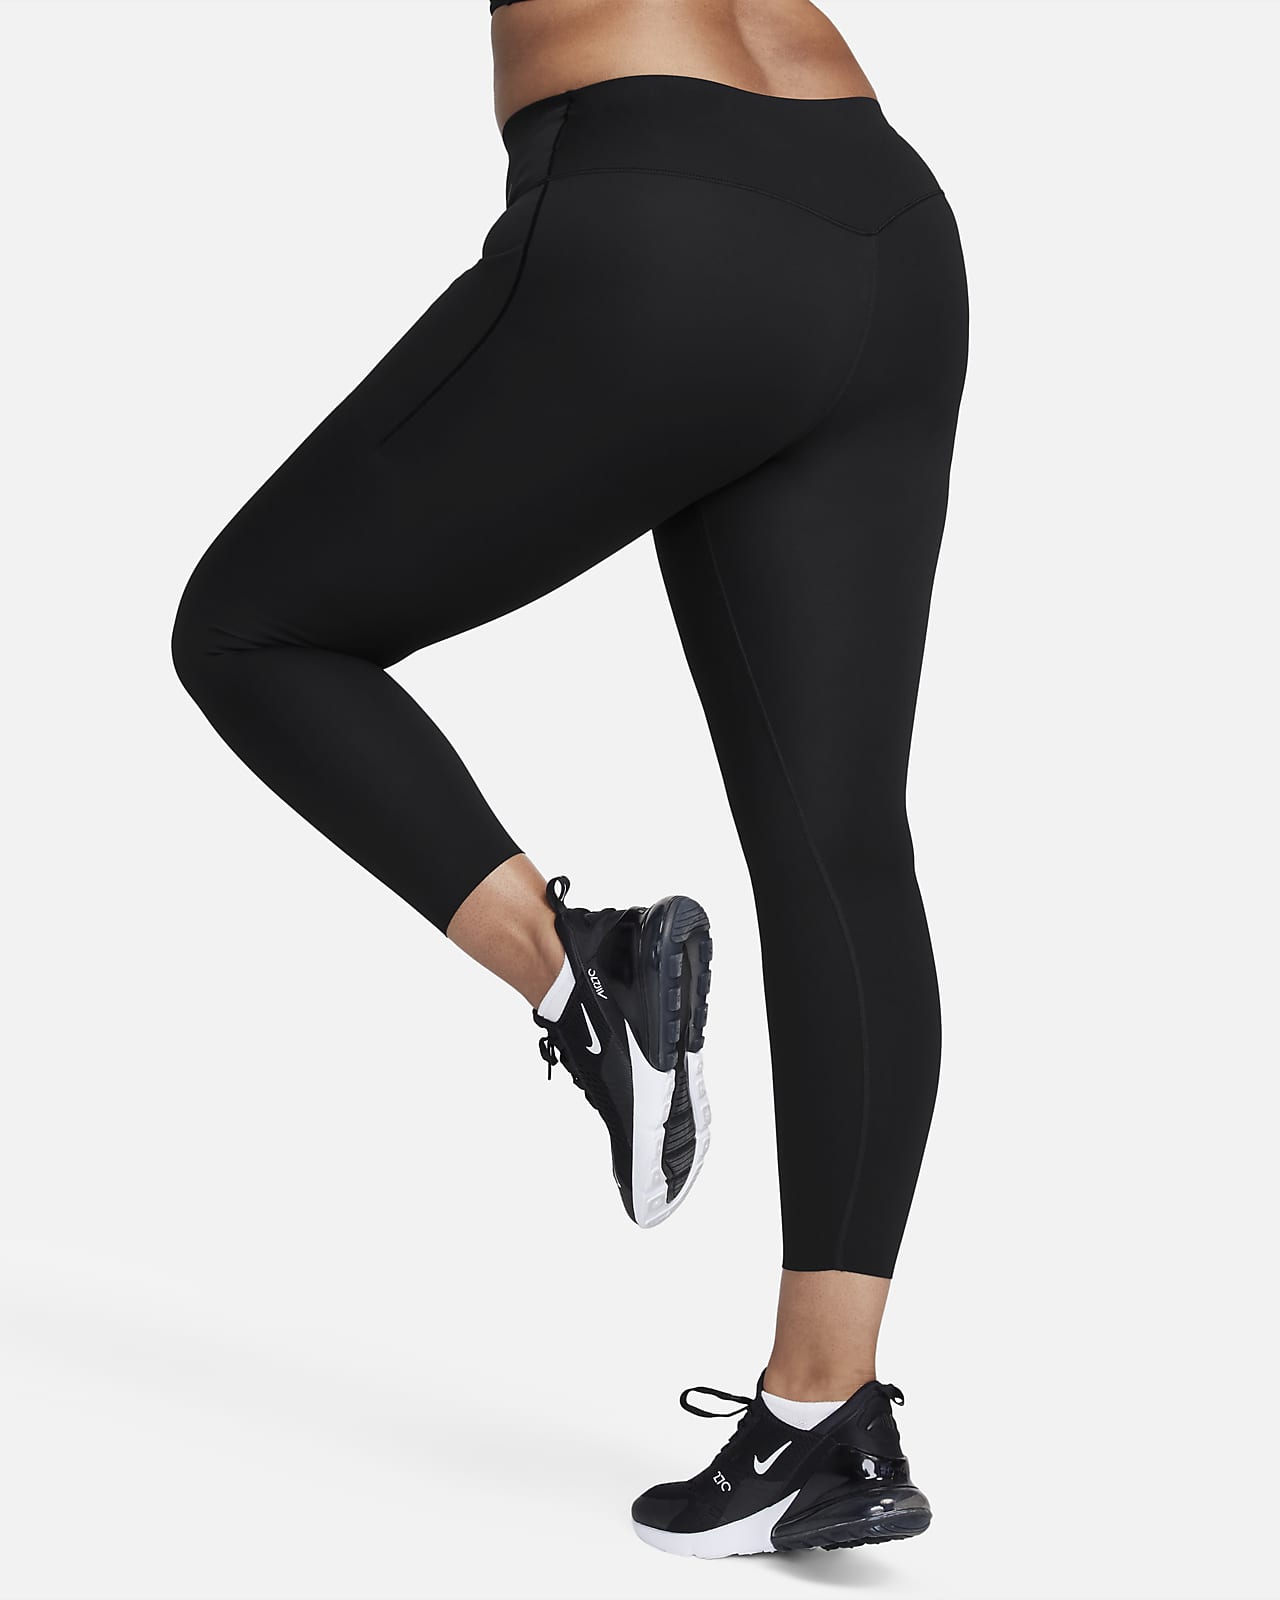 Nike Dri Fit JUST DO IT Women's Small Leggings Training Athletic Pants  Black